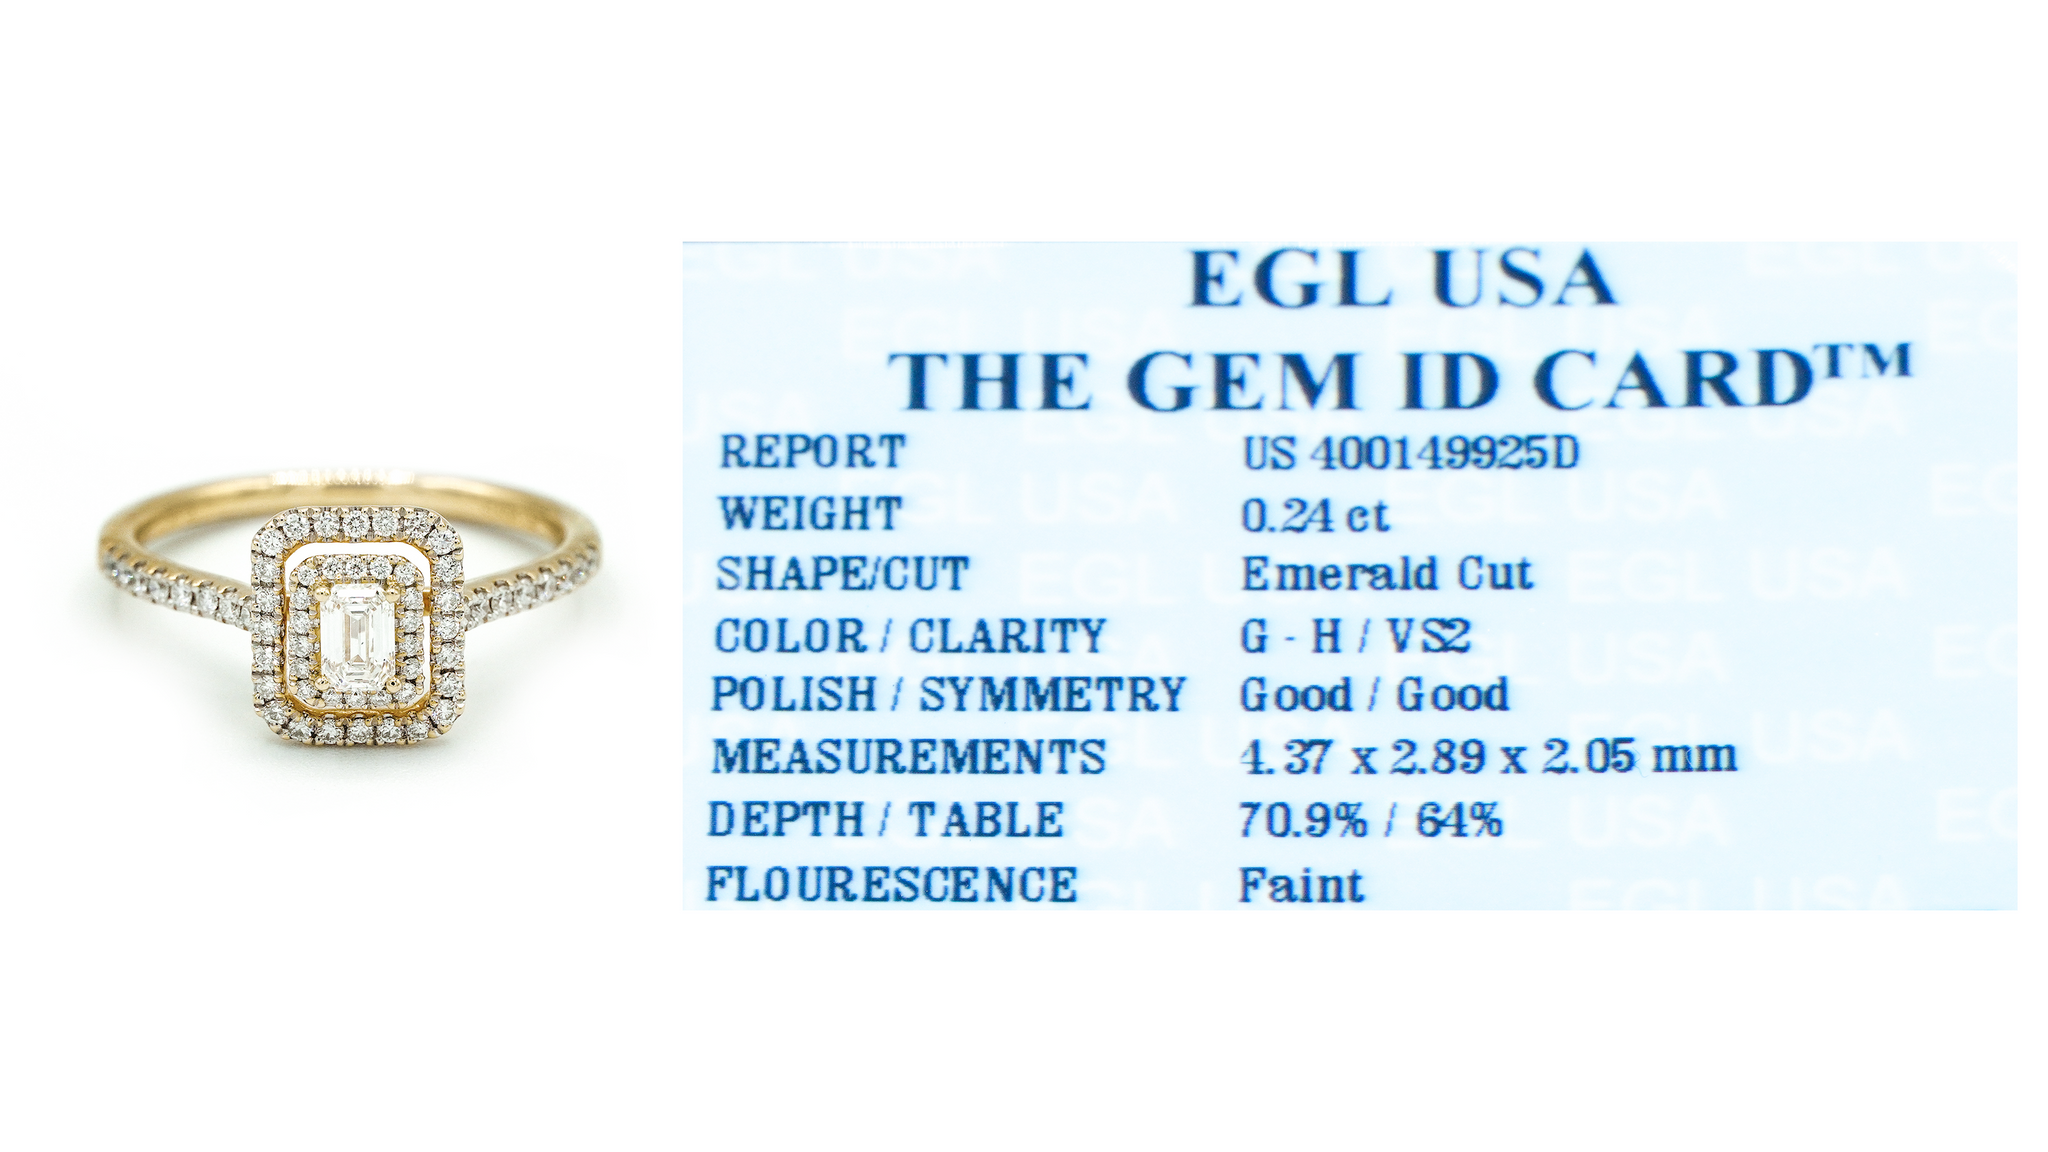 Zeghani - Emerald Cut Diamond Ring in 14kt Yellow Gold